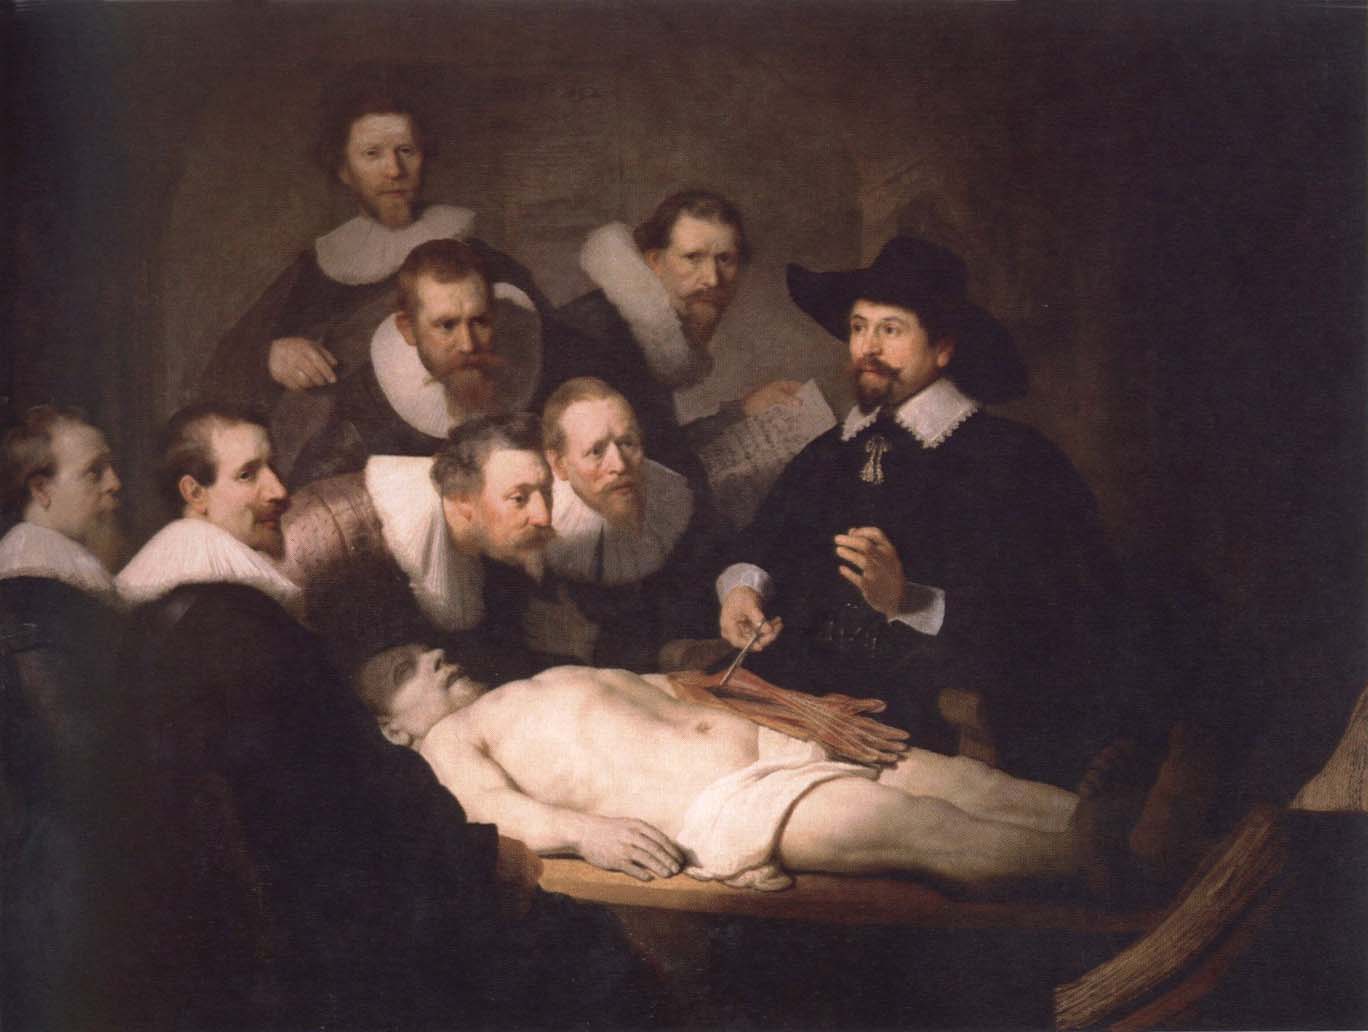 Rembrandt van rijn anatomy lesson of dr,nicolaes tulp